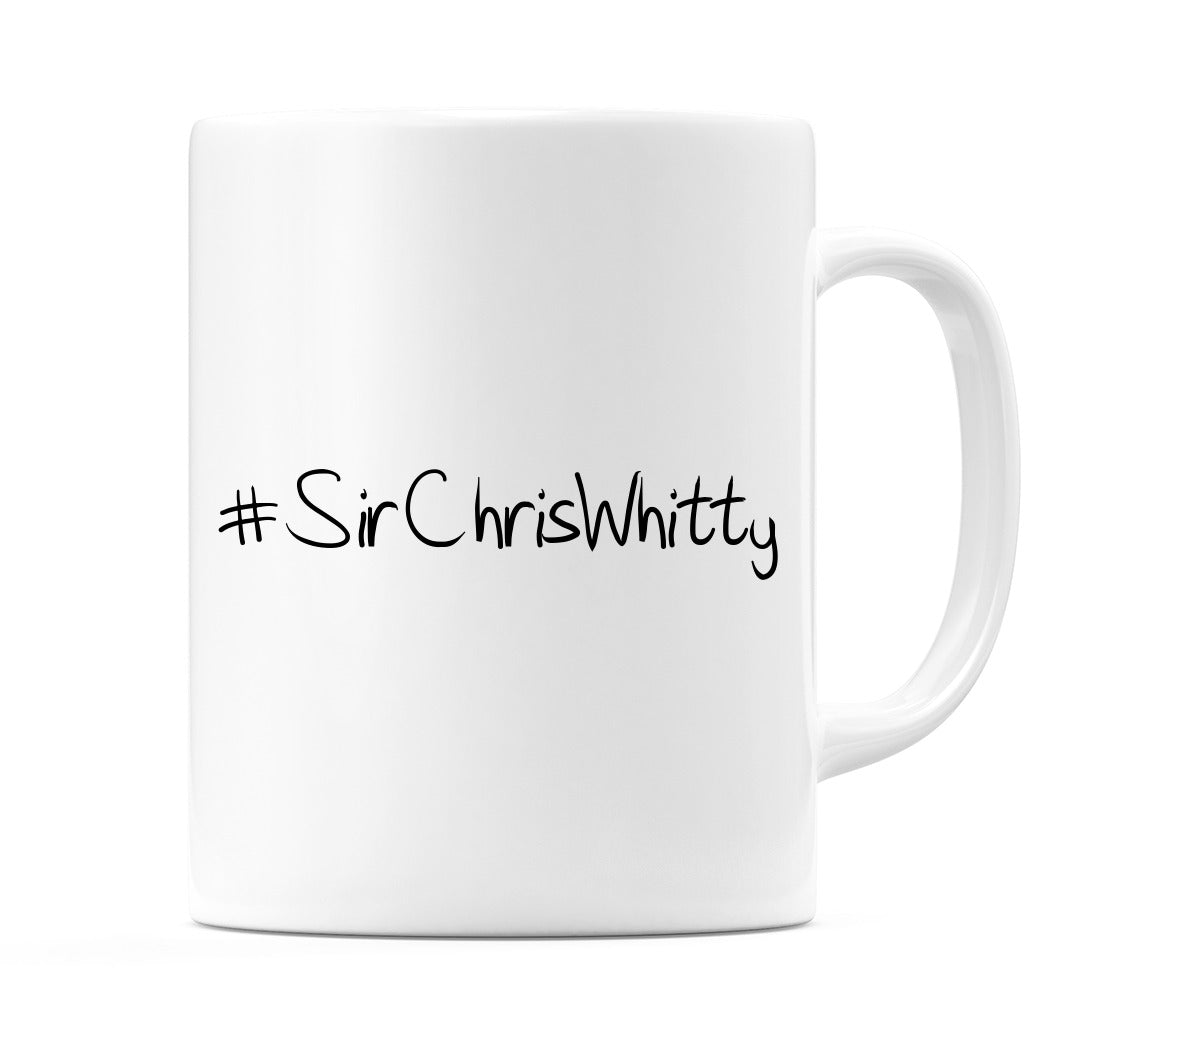 #SirChrisWhitty Mug